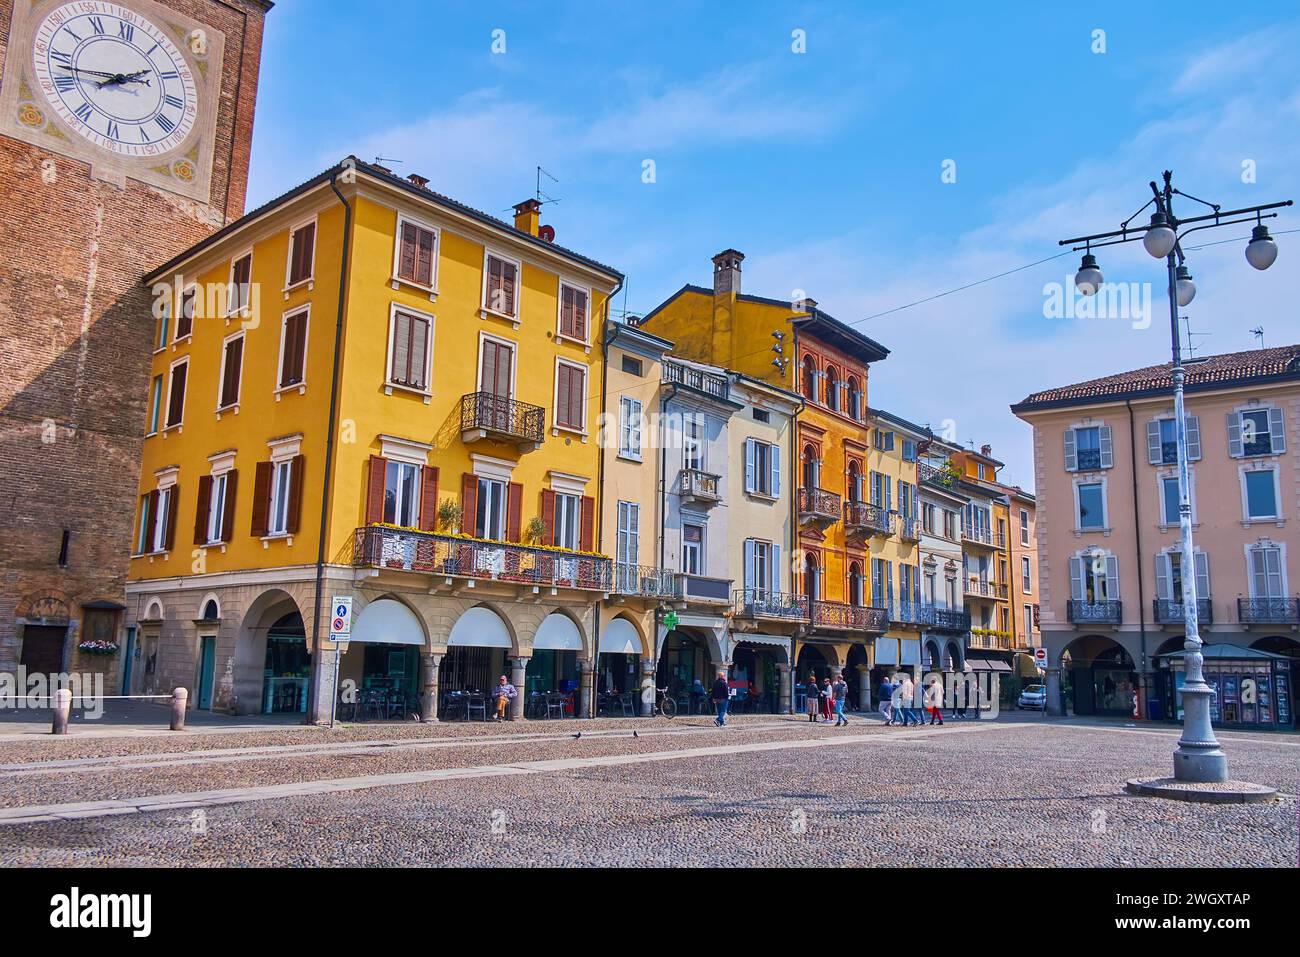 Piazza della Vittoria Square with colored historic houses, stores and restaurants, Lodi, Lombardy, Italy Stock Photo